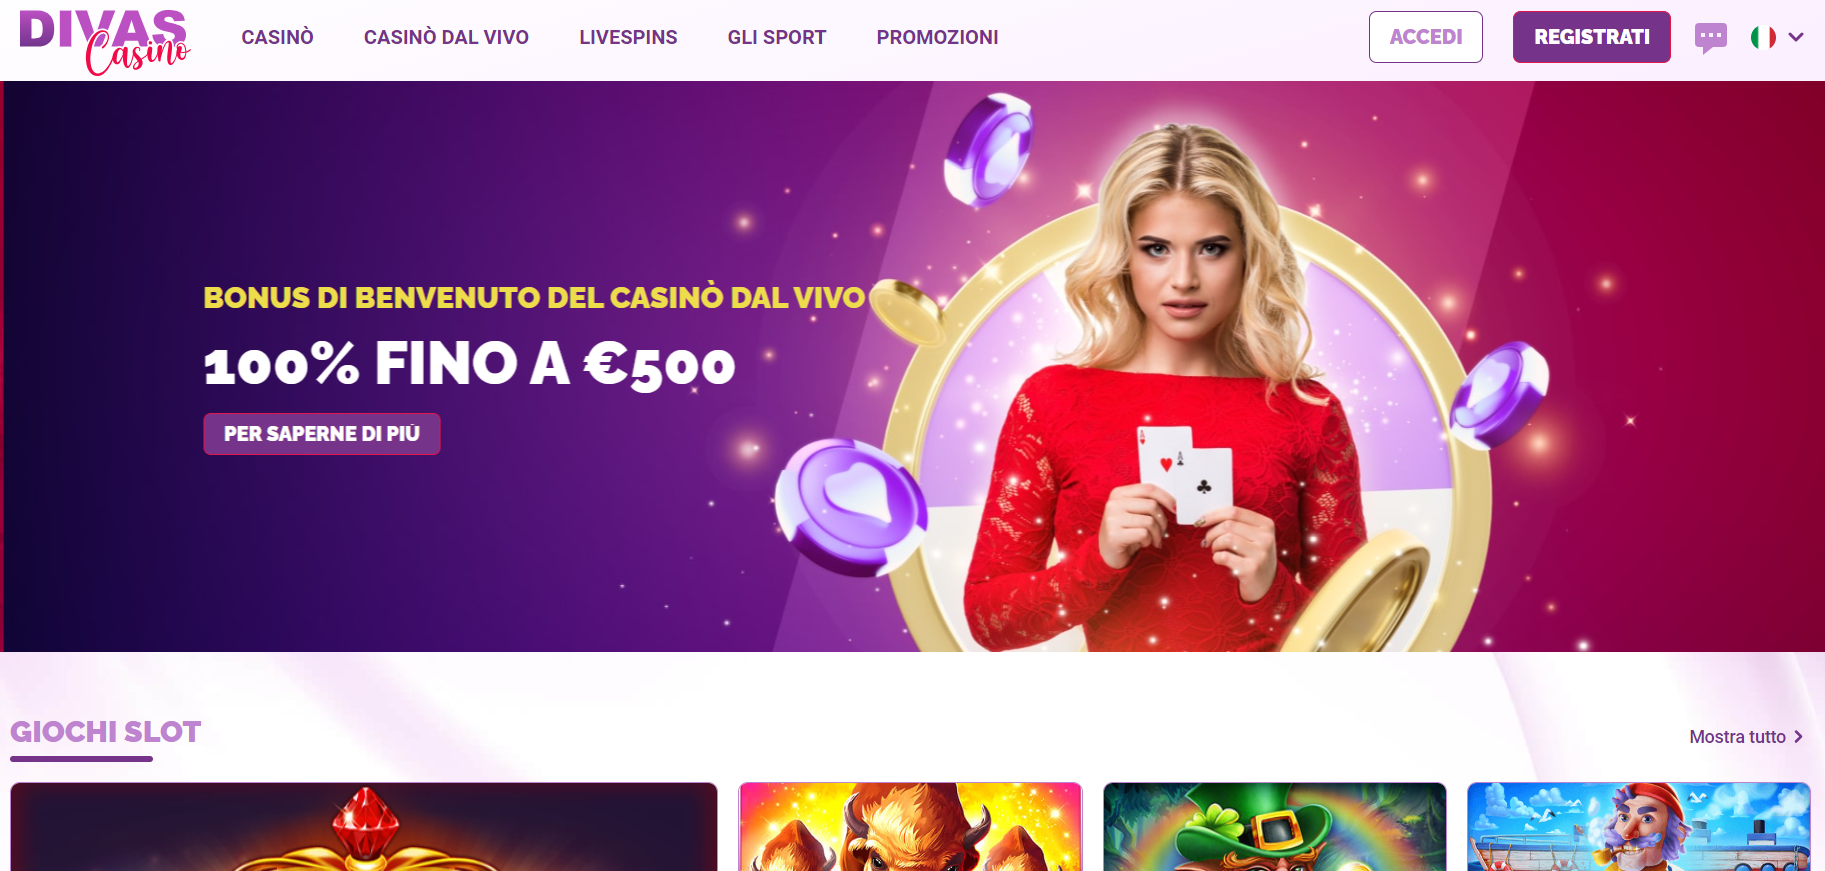 Divas Casino Home Page